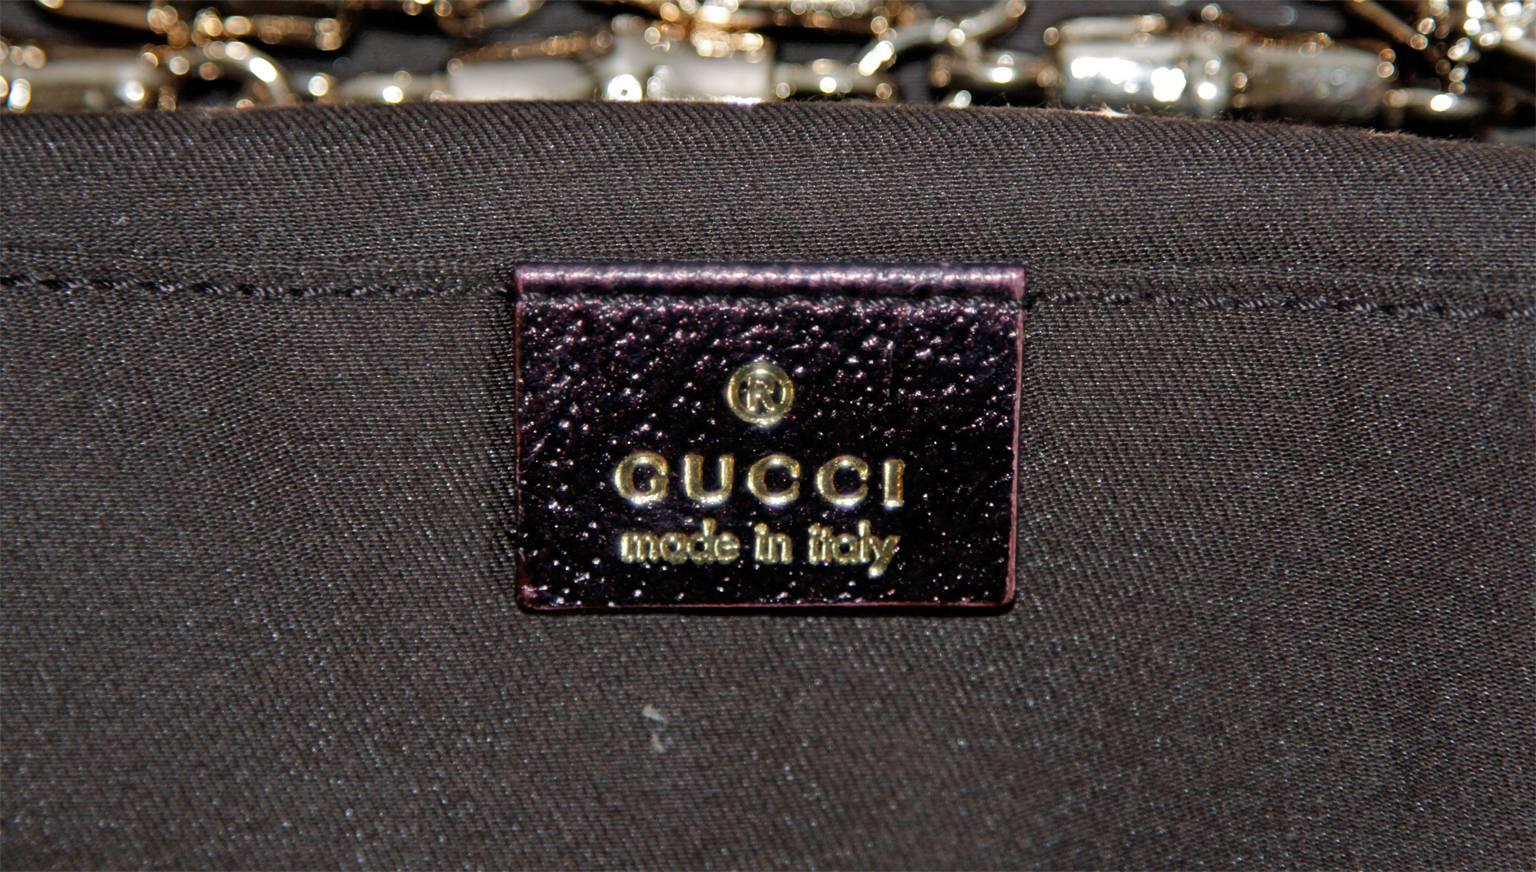 Iconic Tom Ford Gucci FW 2004 Leather Silk Crystal Runway Ad Campaign Dragon Bag 3